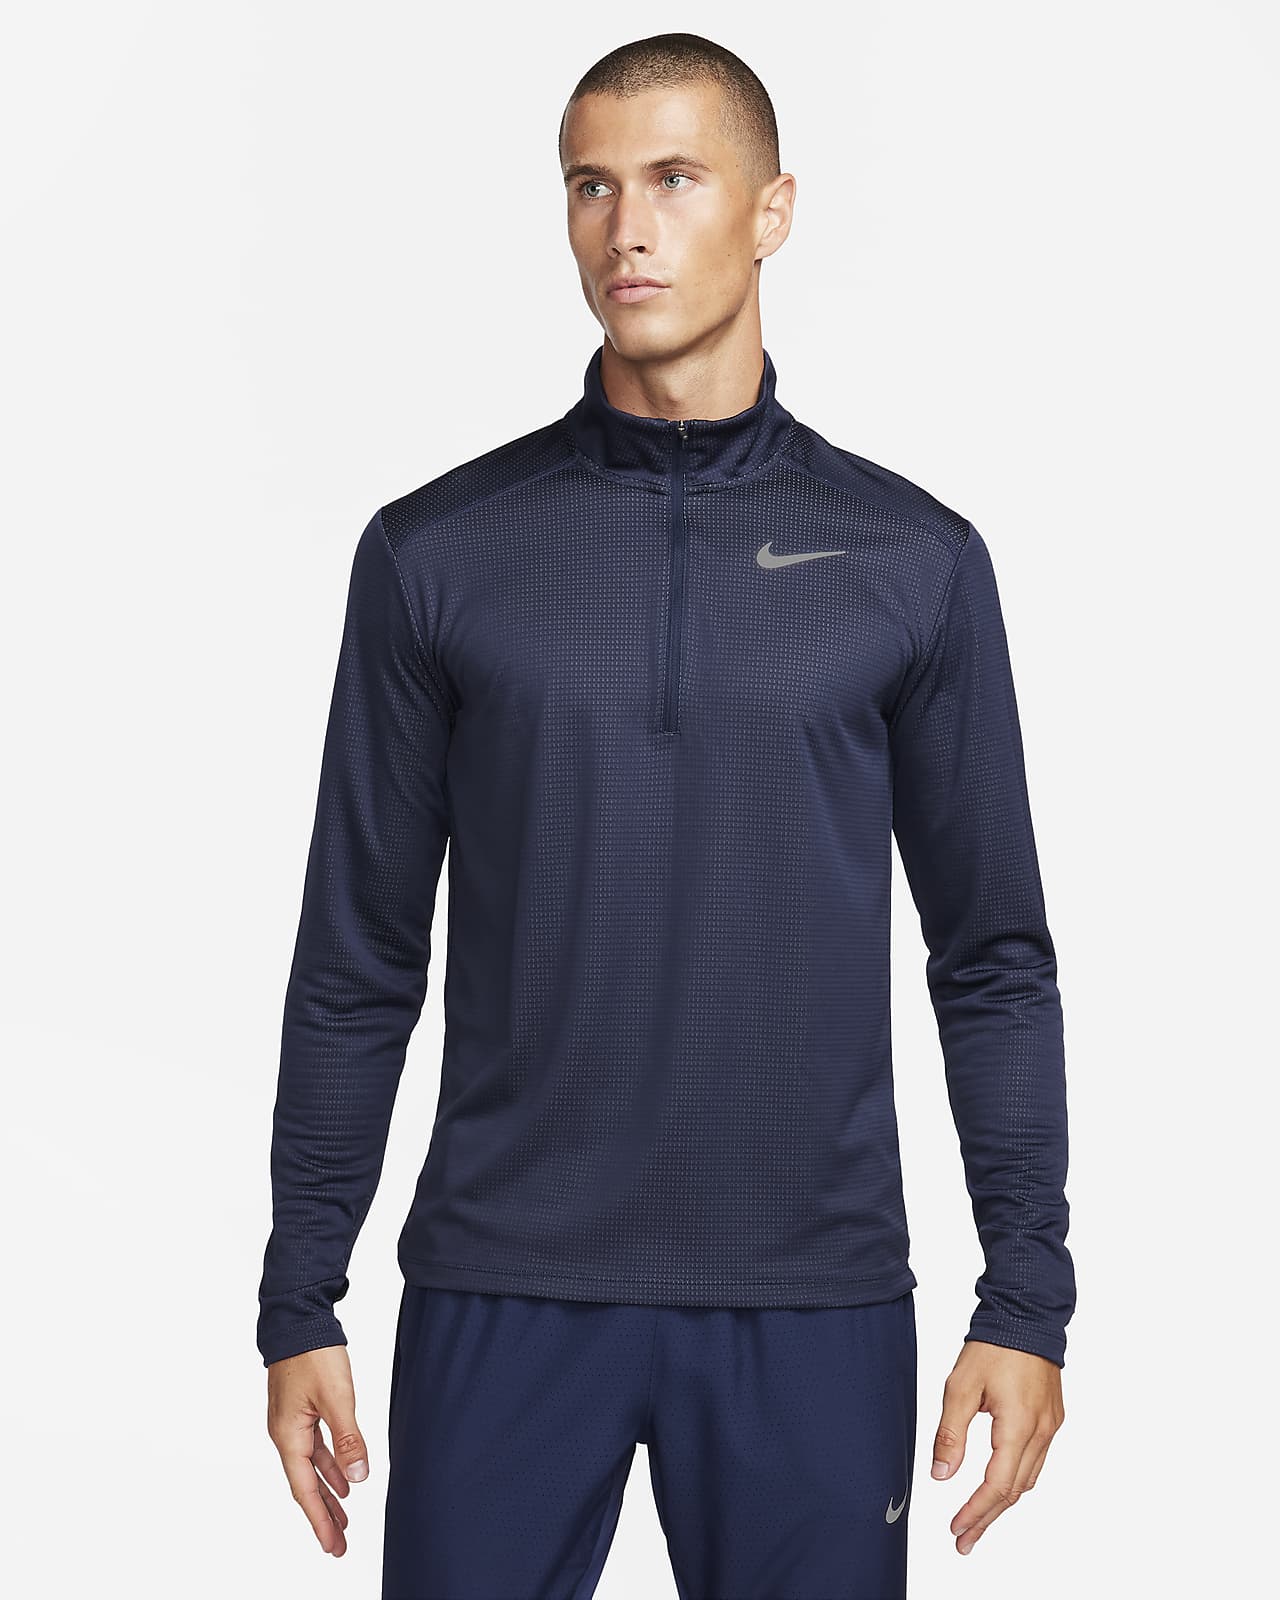 Amigo Microbio músculo Nike Pacer Camiseta de running con media cremallera - Hombre. Nike ES